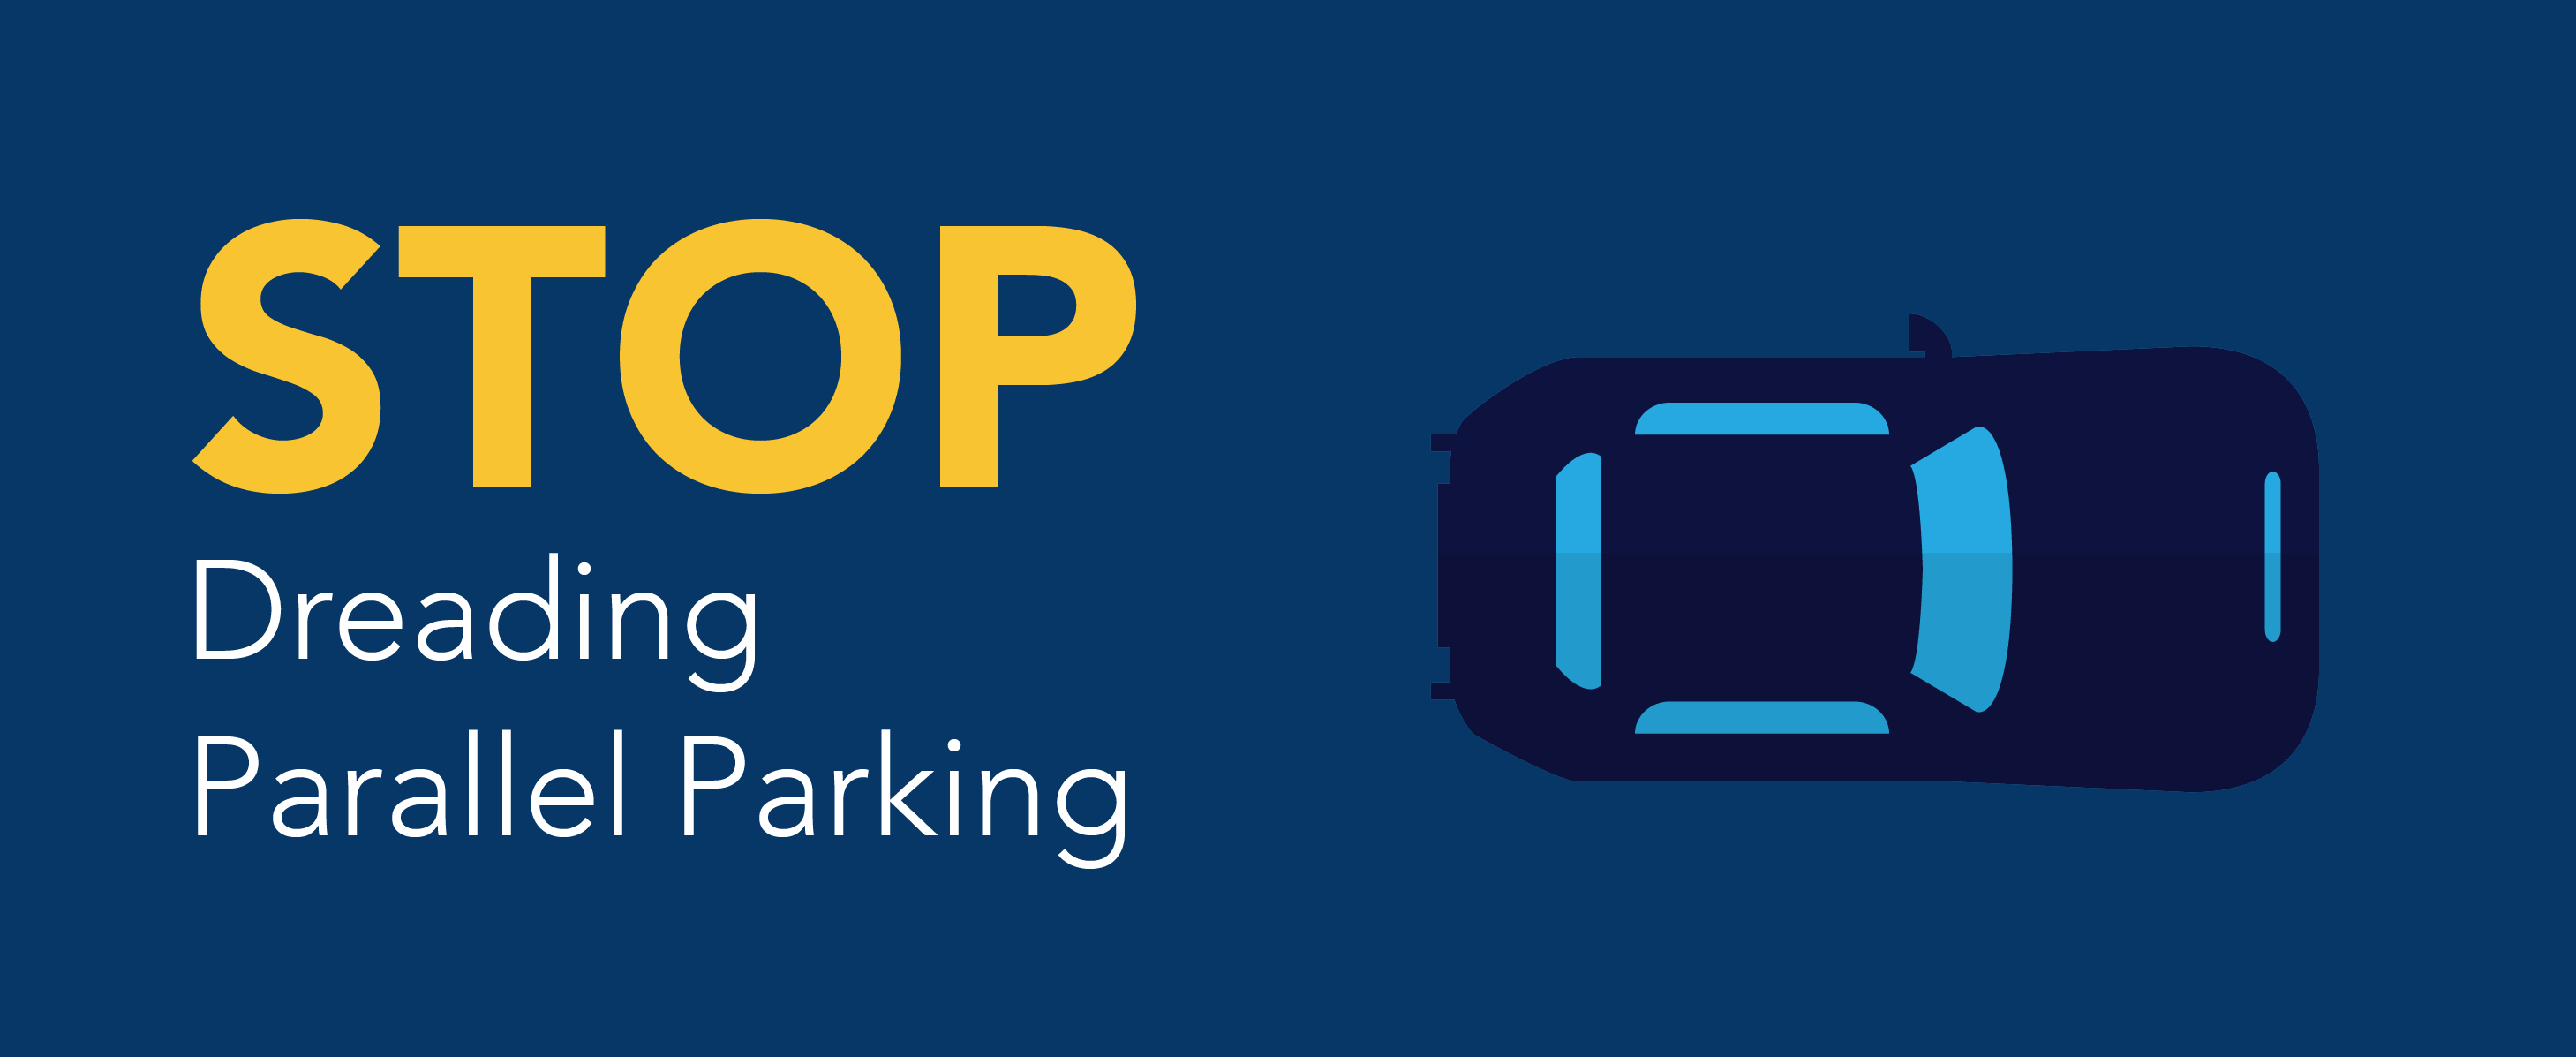 Stop dreading parallel parking. *car graphic*